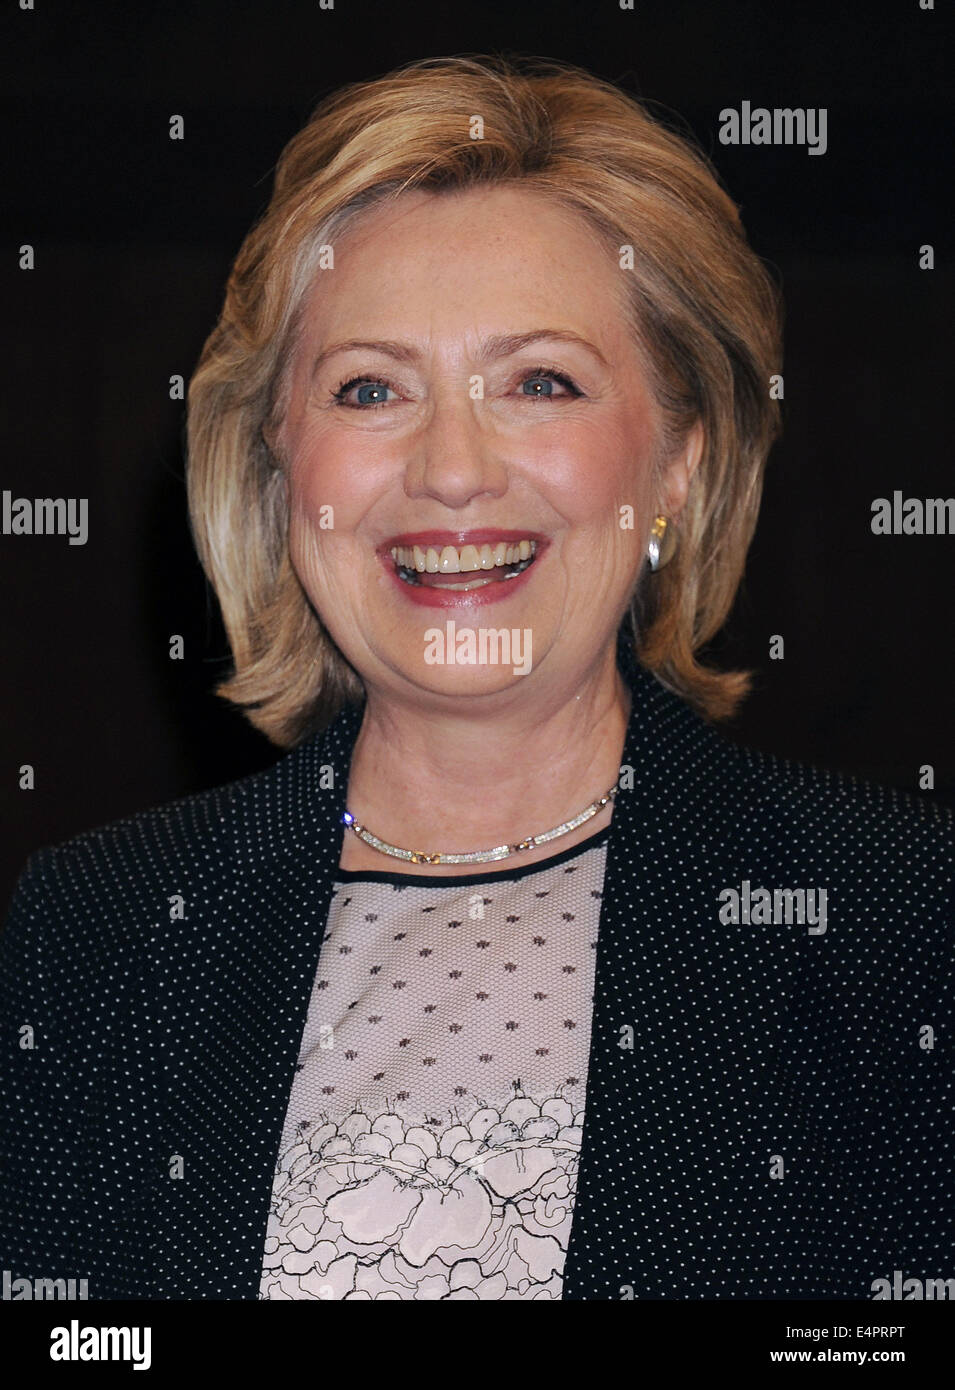 HILARY CLINTON noi stateswoman nel luglio 2014. Foto di Jeffrey Mayer Foto Stock